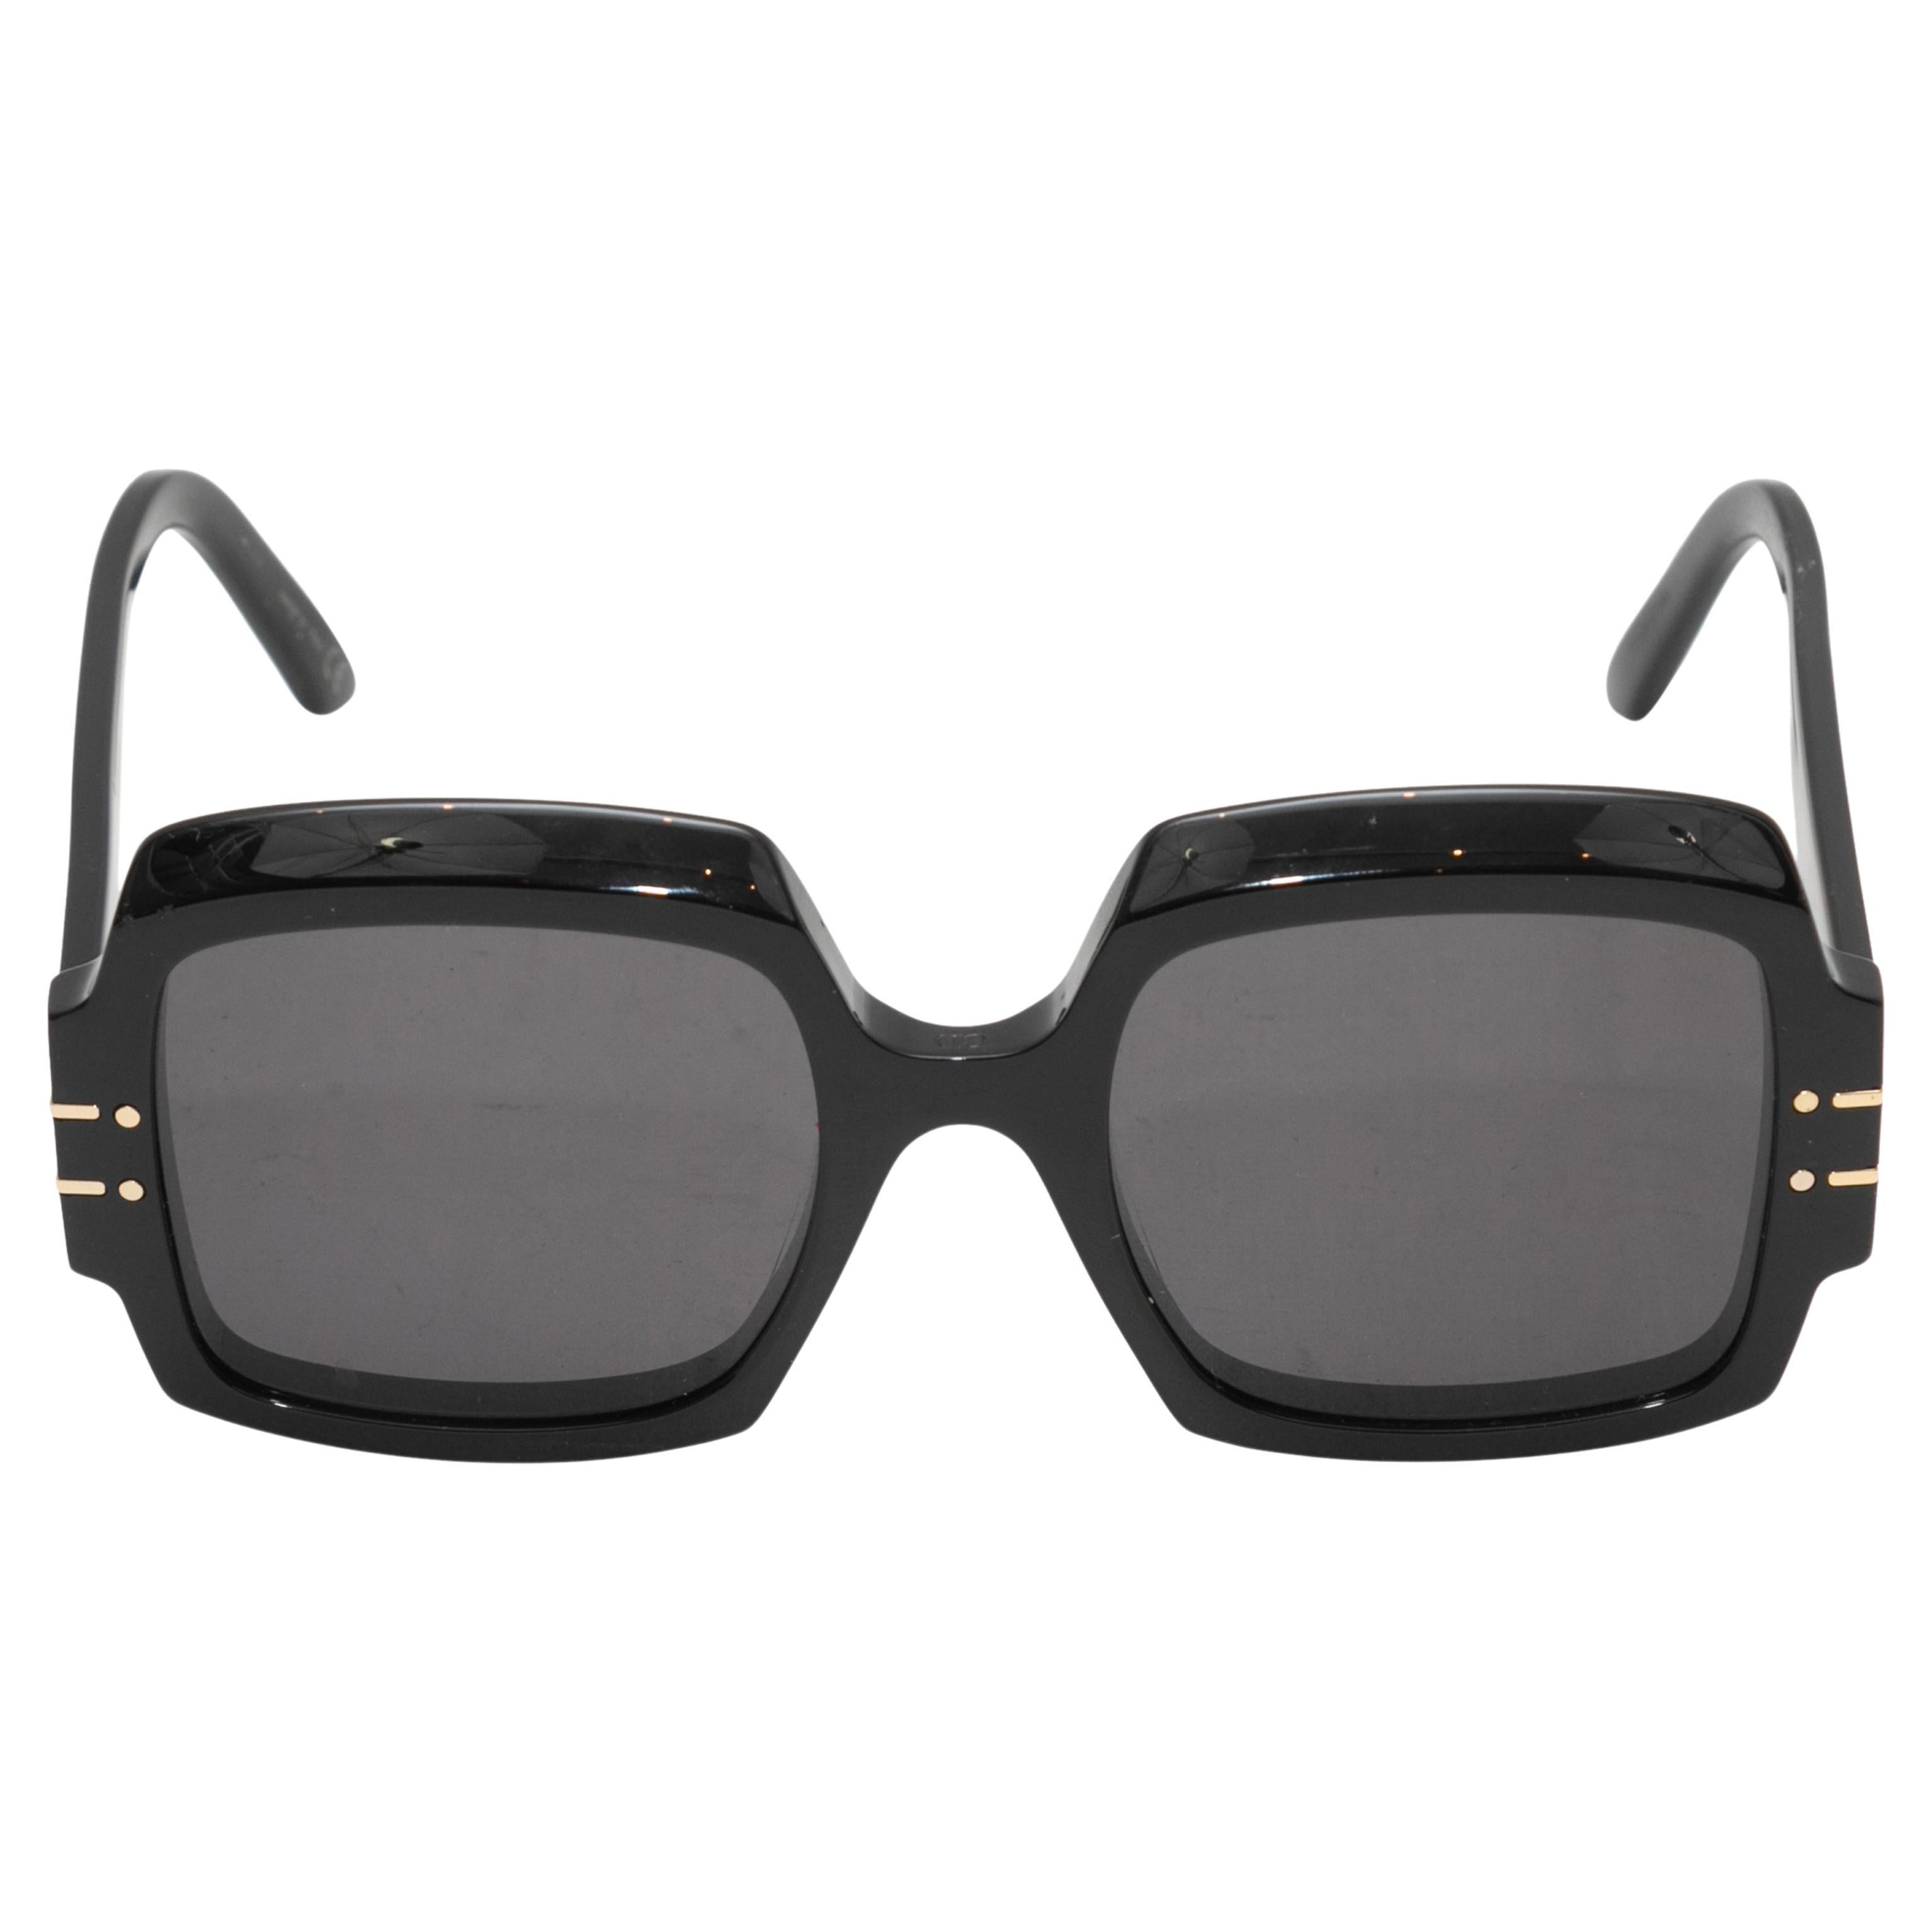 Sunglasses DIOR DIORMIDNIGHT S2F 10A0 56-20 Black in stock | Price 230,83 €  | Visiofactory